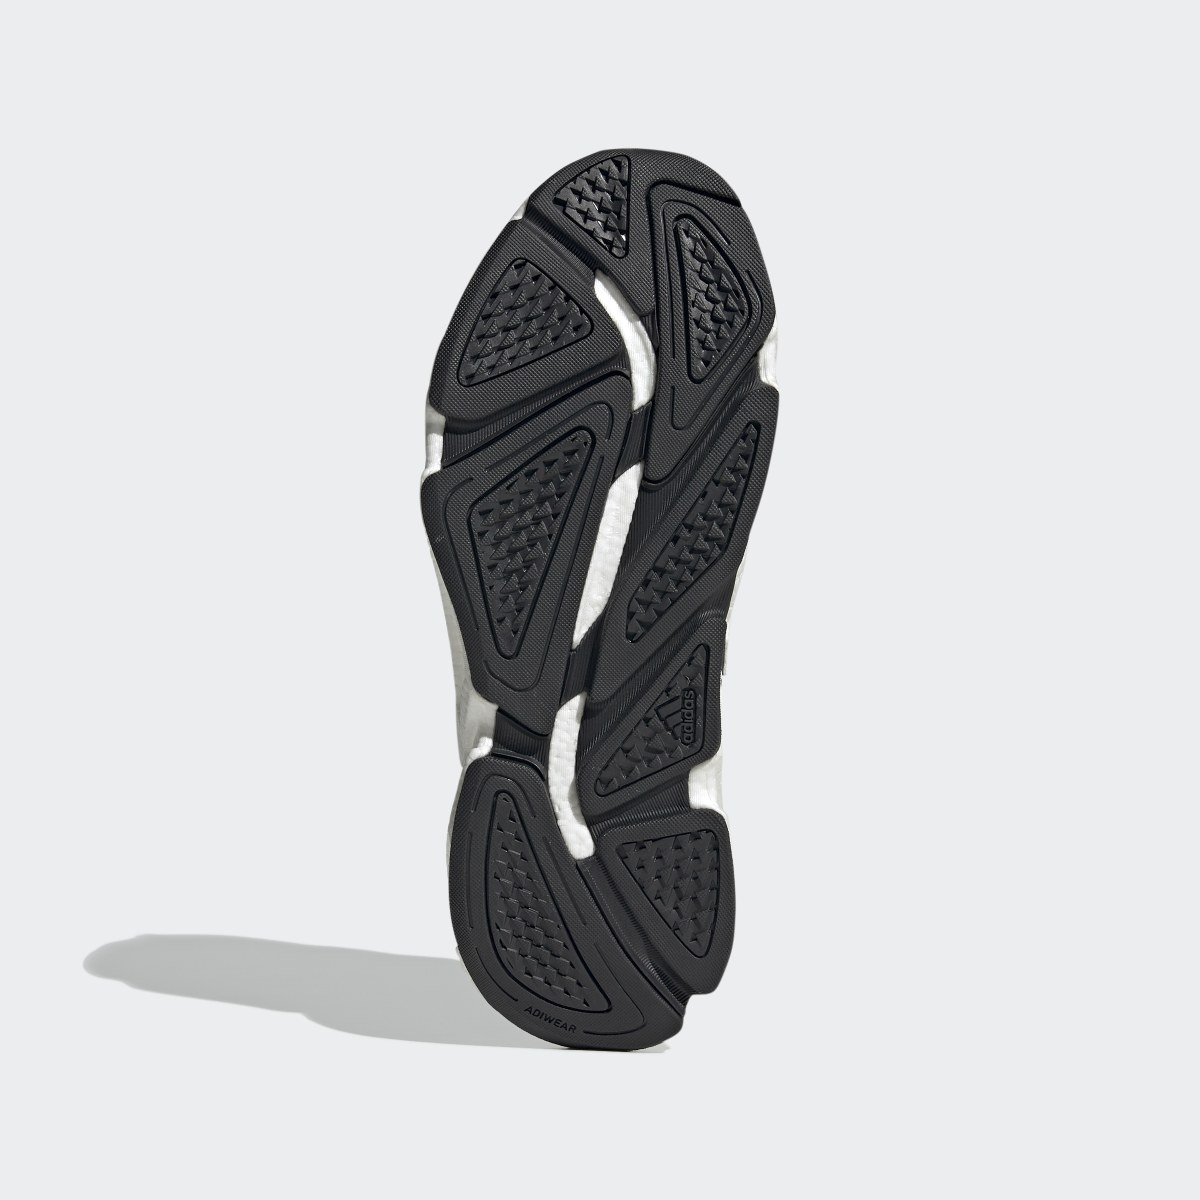 Adidas x Karlie Kloss X9000 Shoes. 4